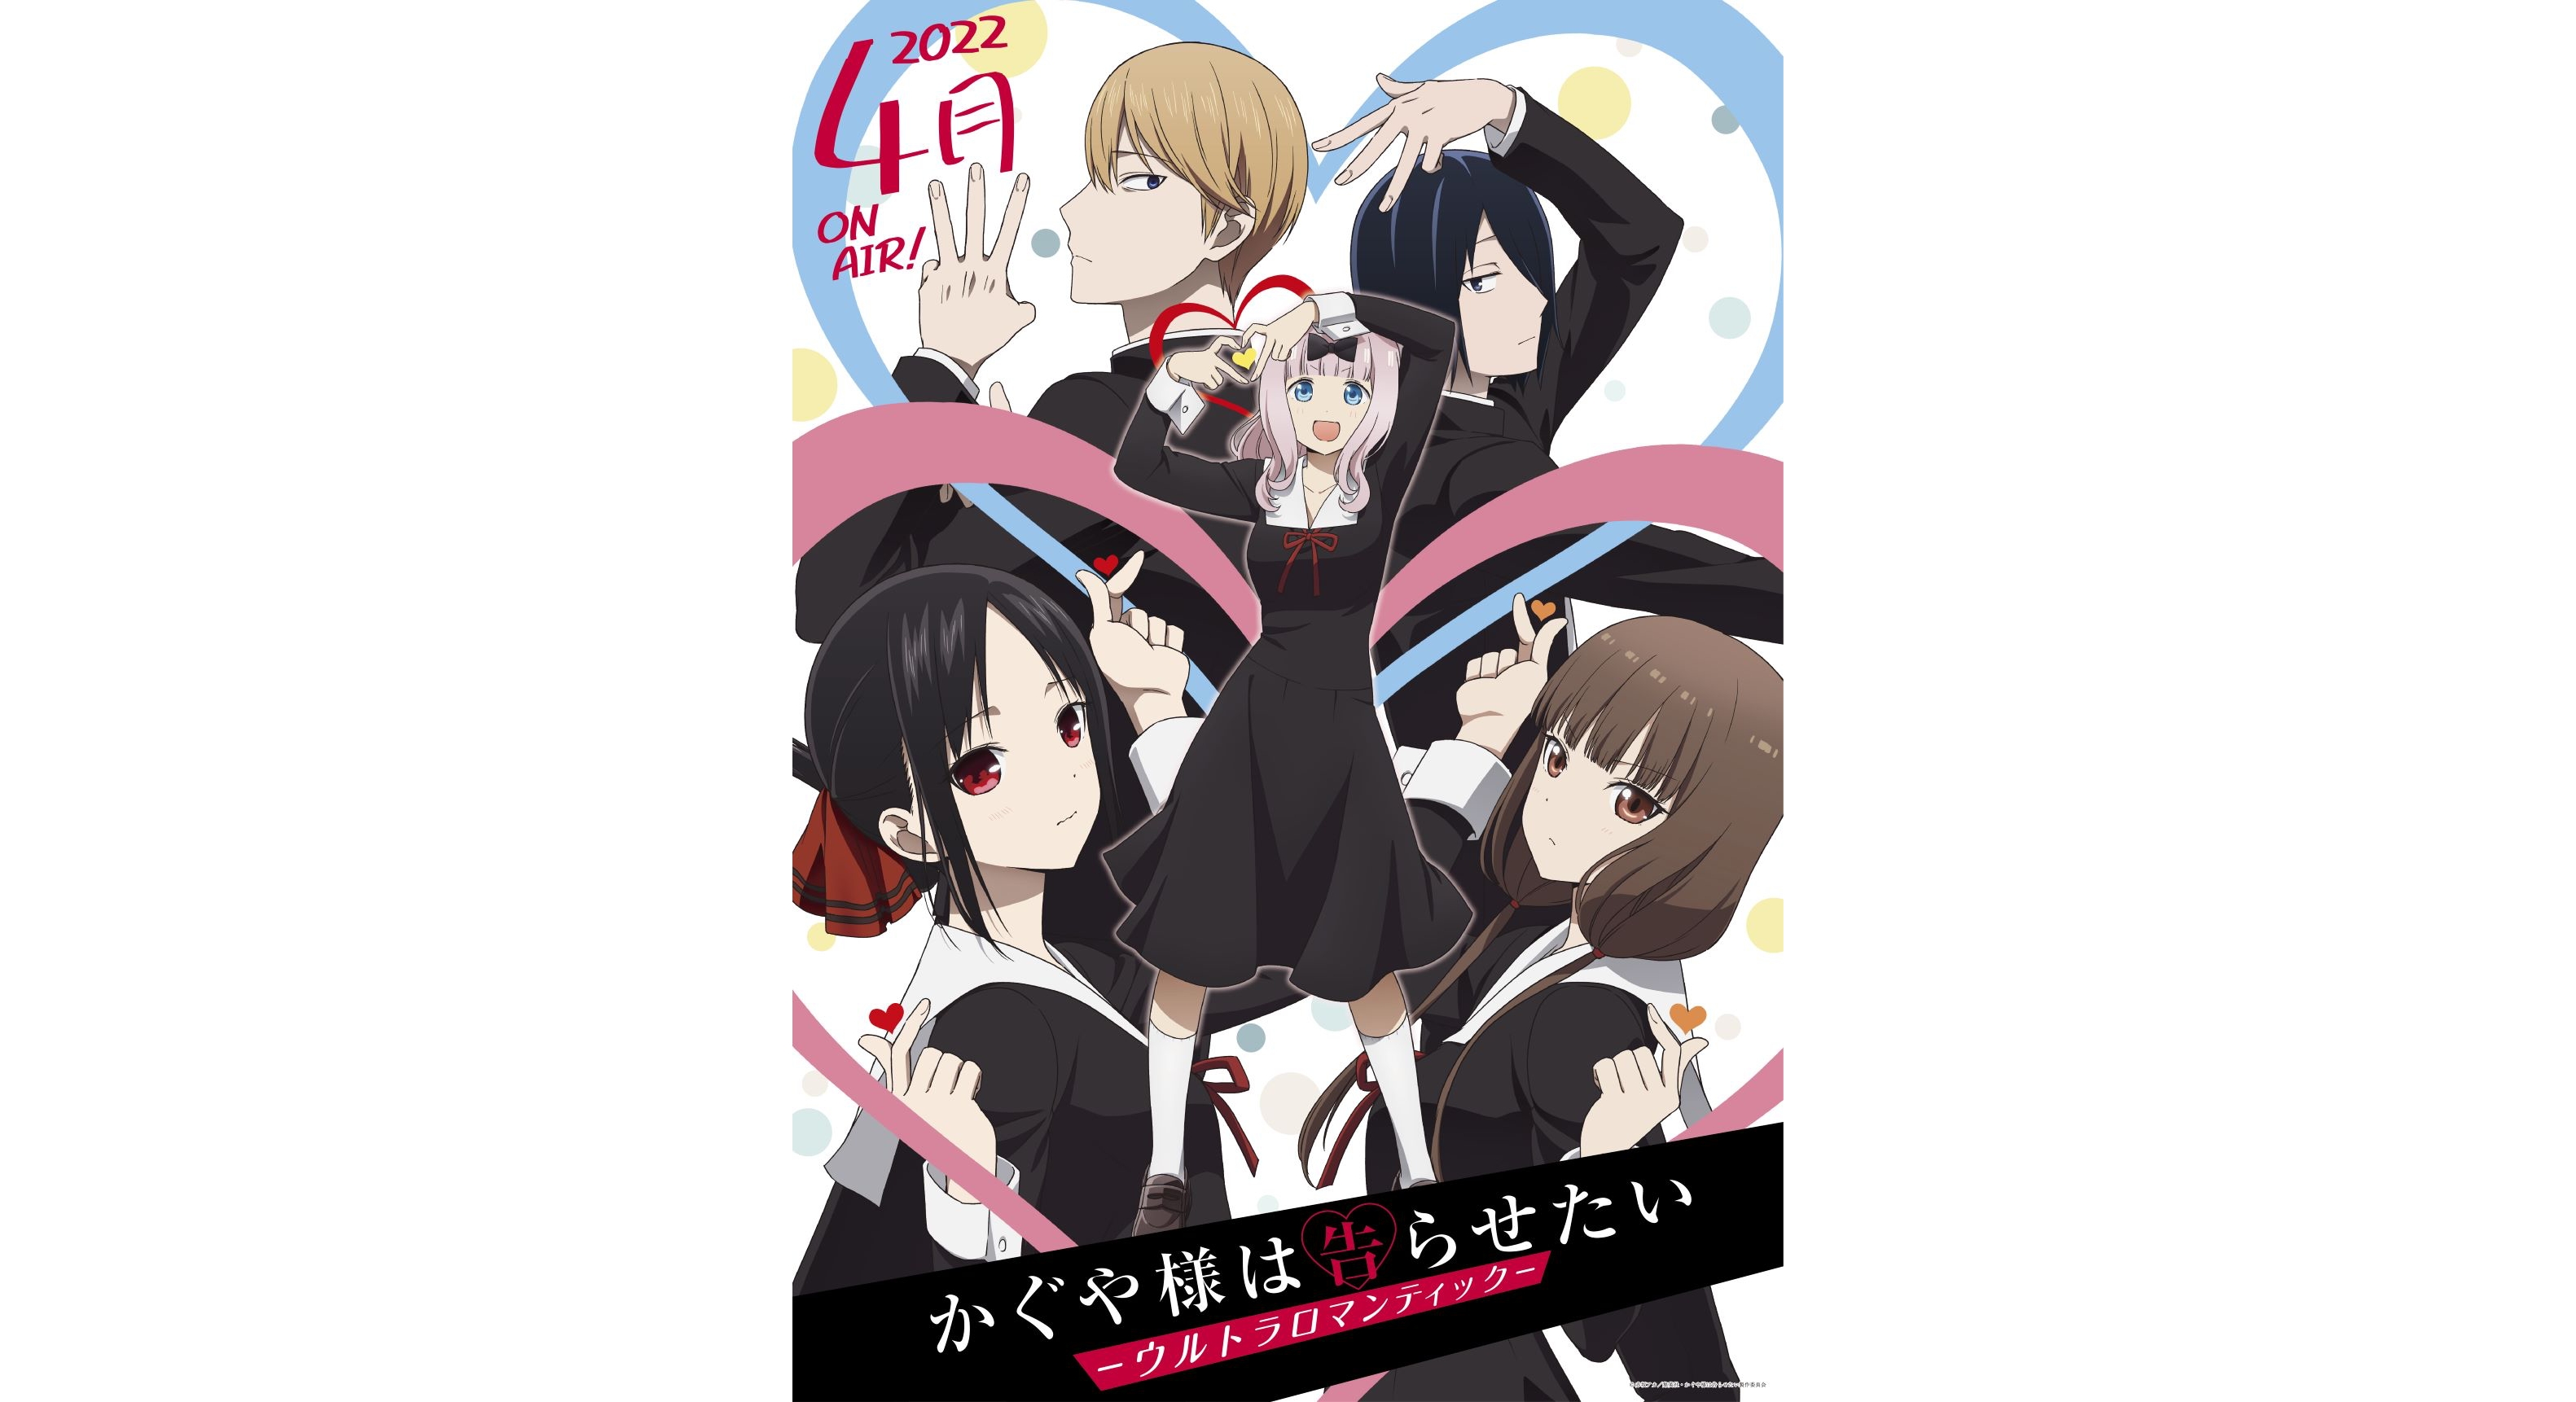 Kaguya-sama: Love is War - Ultra Romantic - Vol. 1 (Limited Edition)  [Blu-ray]